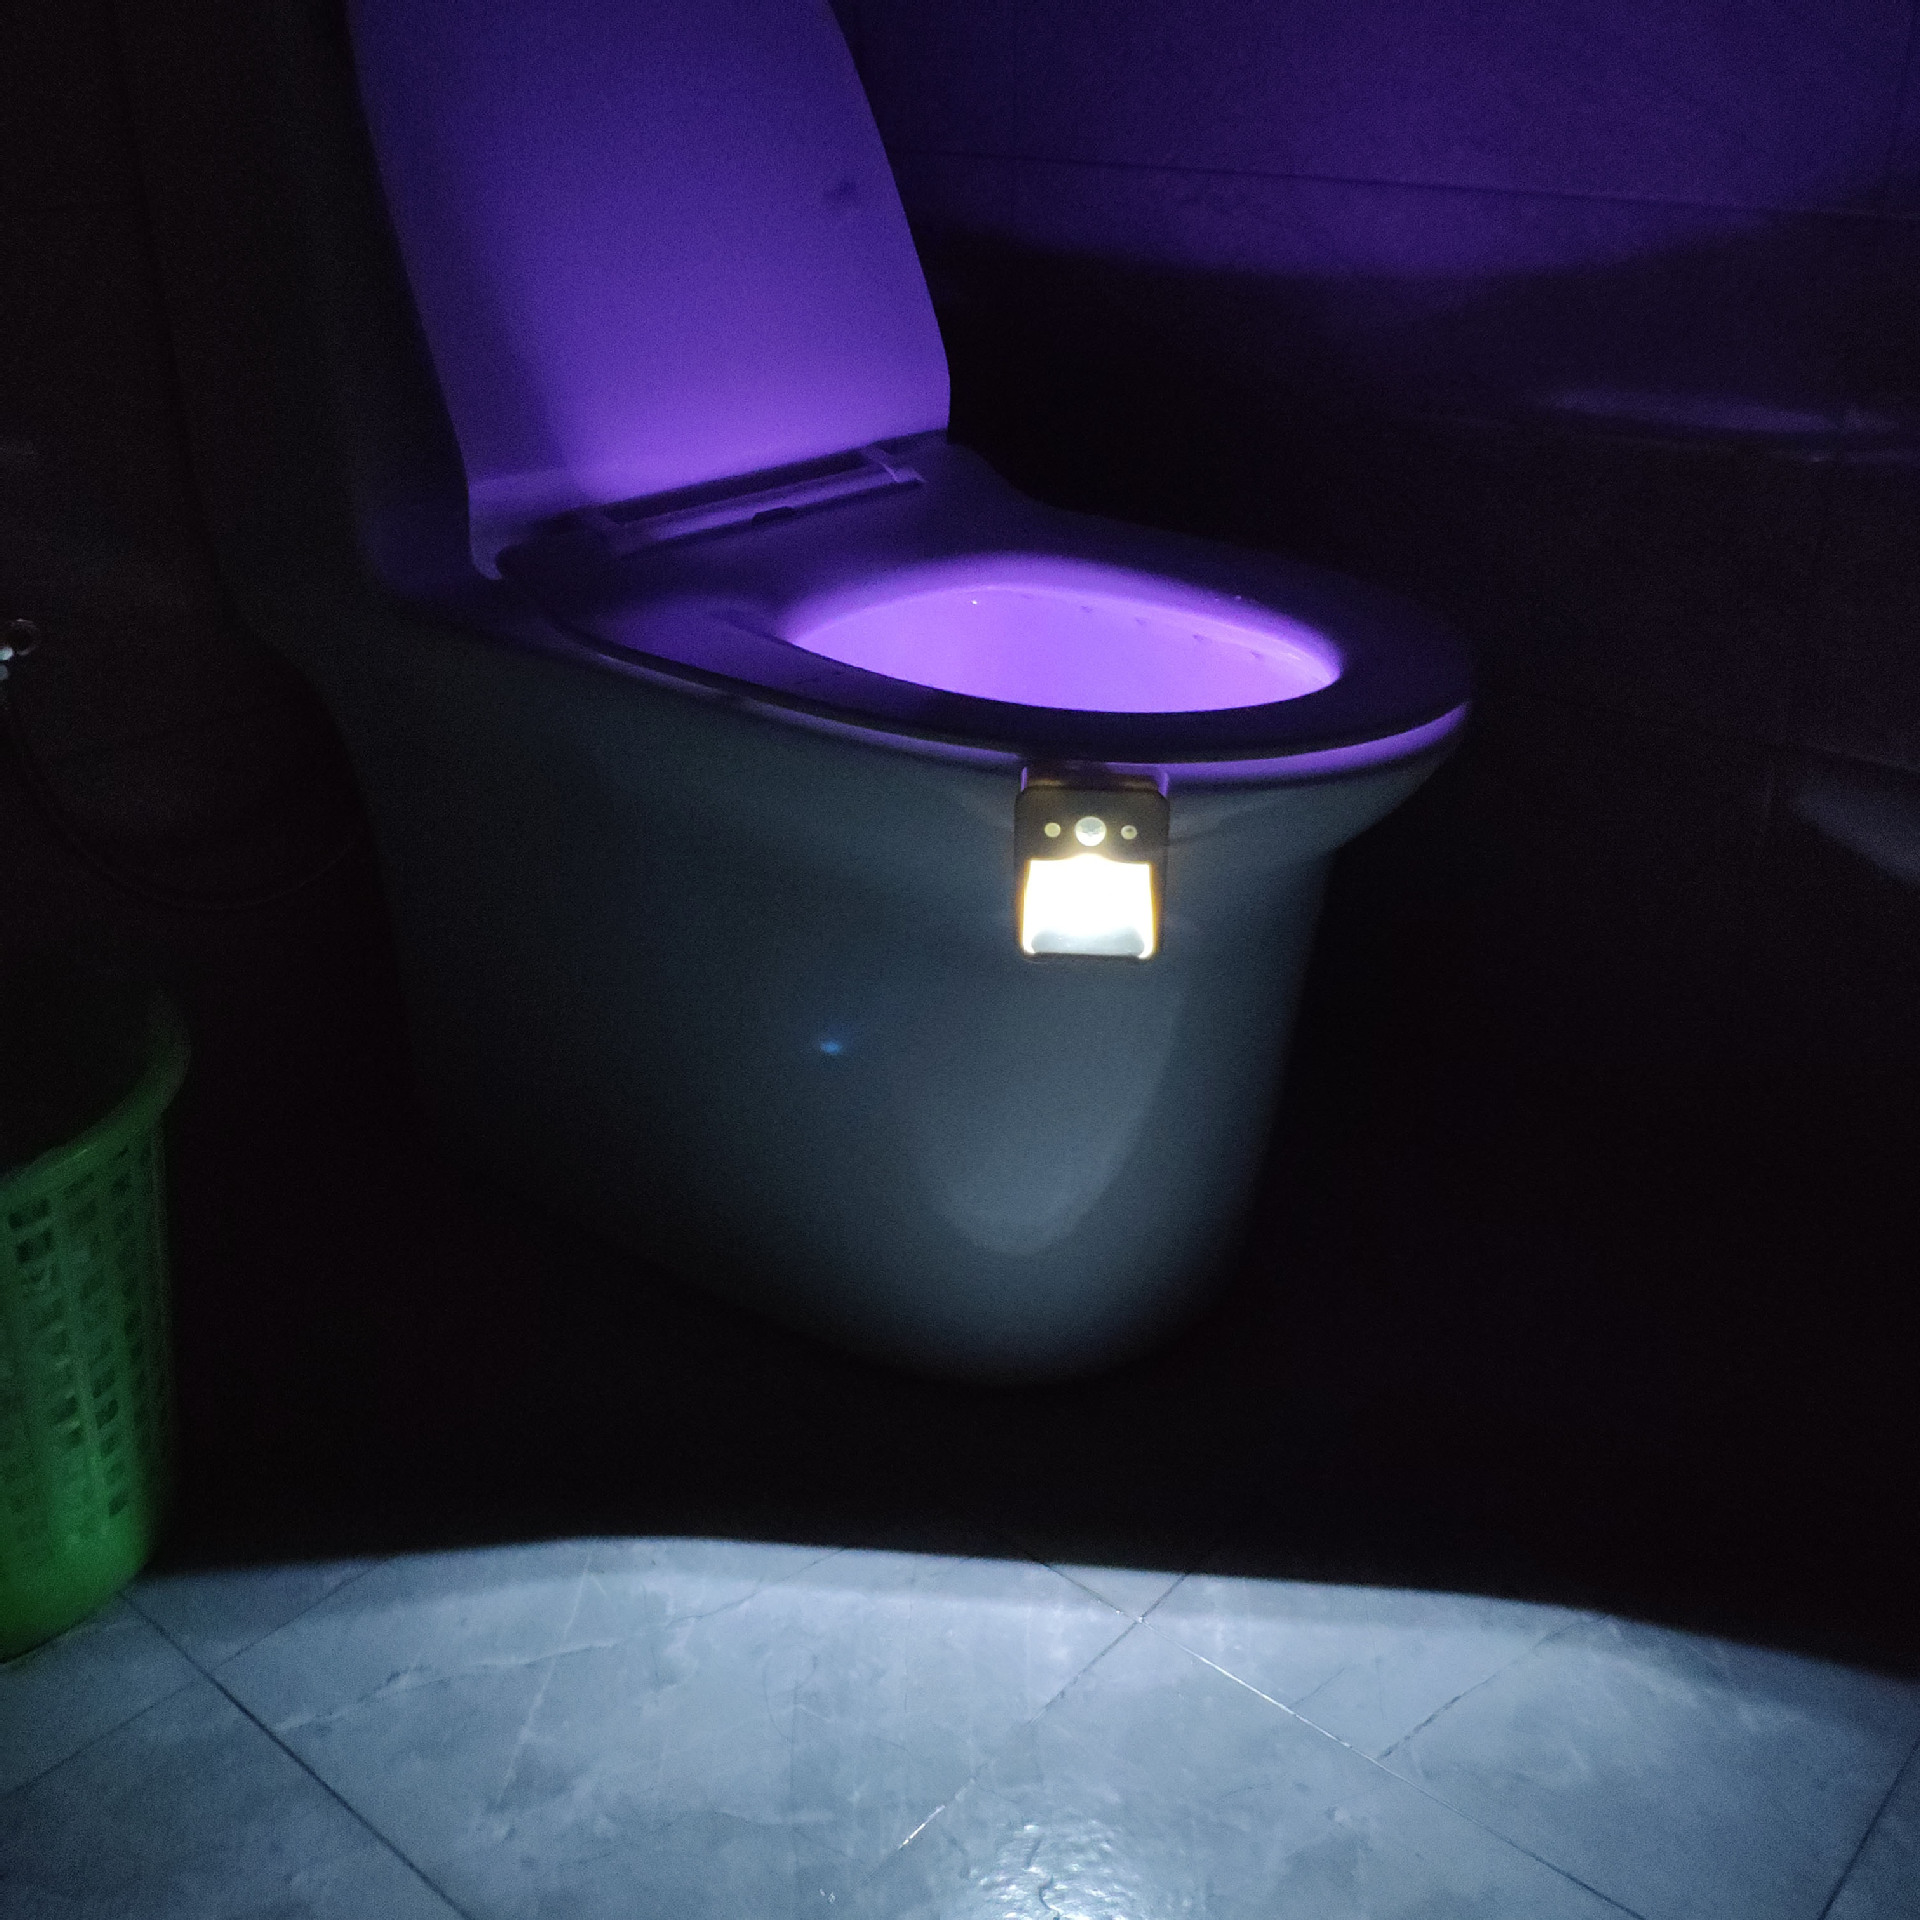 16-Colors-LED-Induction-Toilet-Light-With-Aromatherapy-Toilet-Sensor-Night-Light-Decor-1754296-11